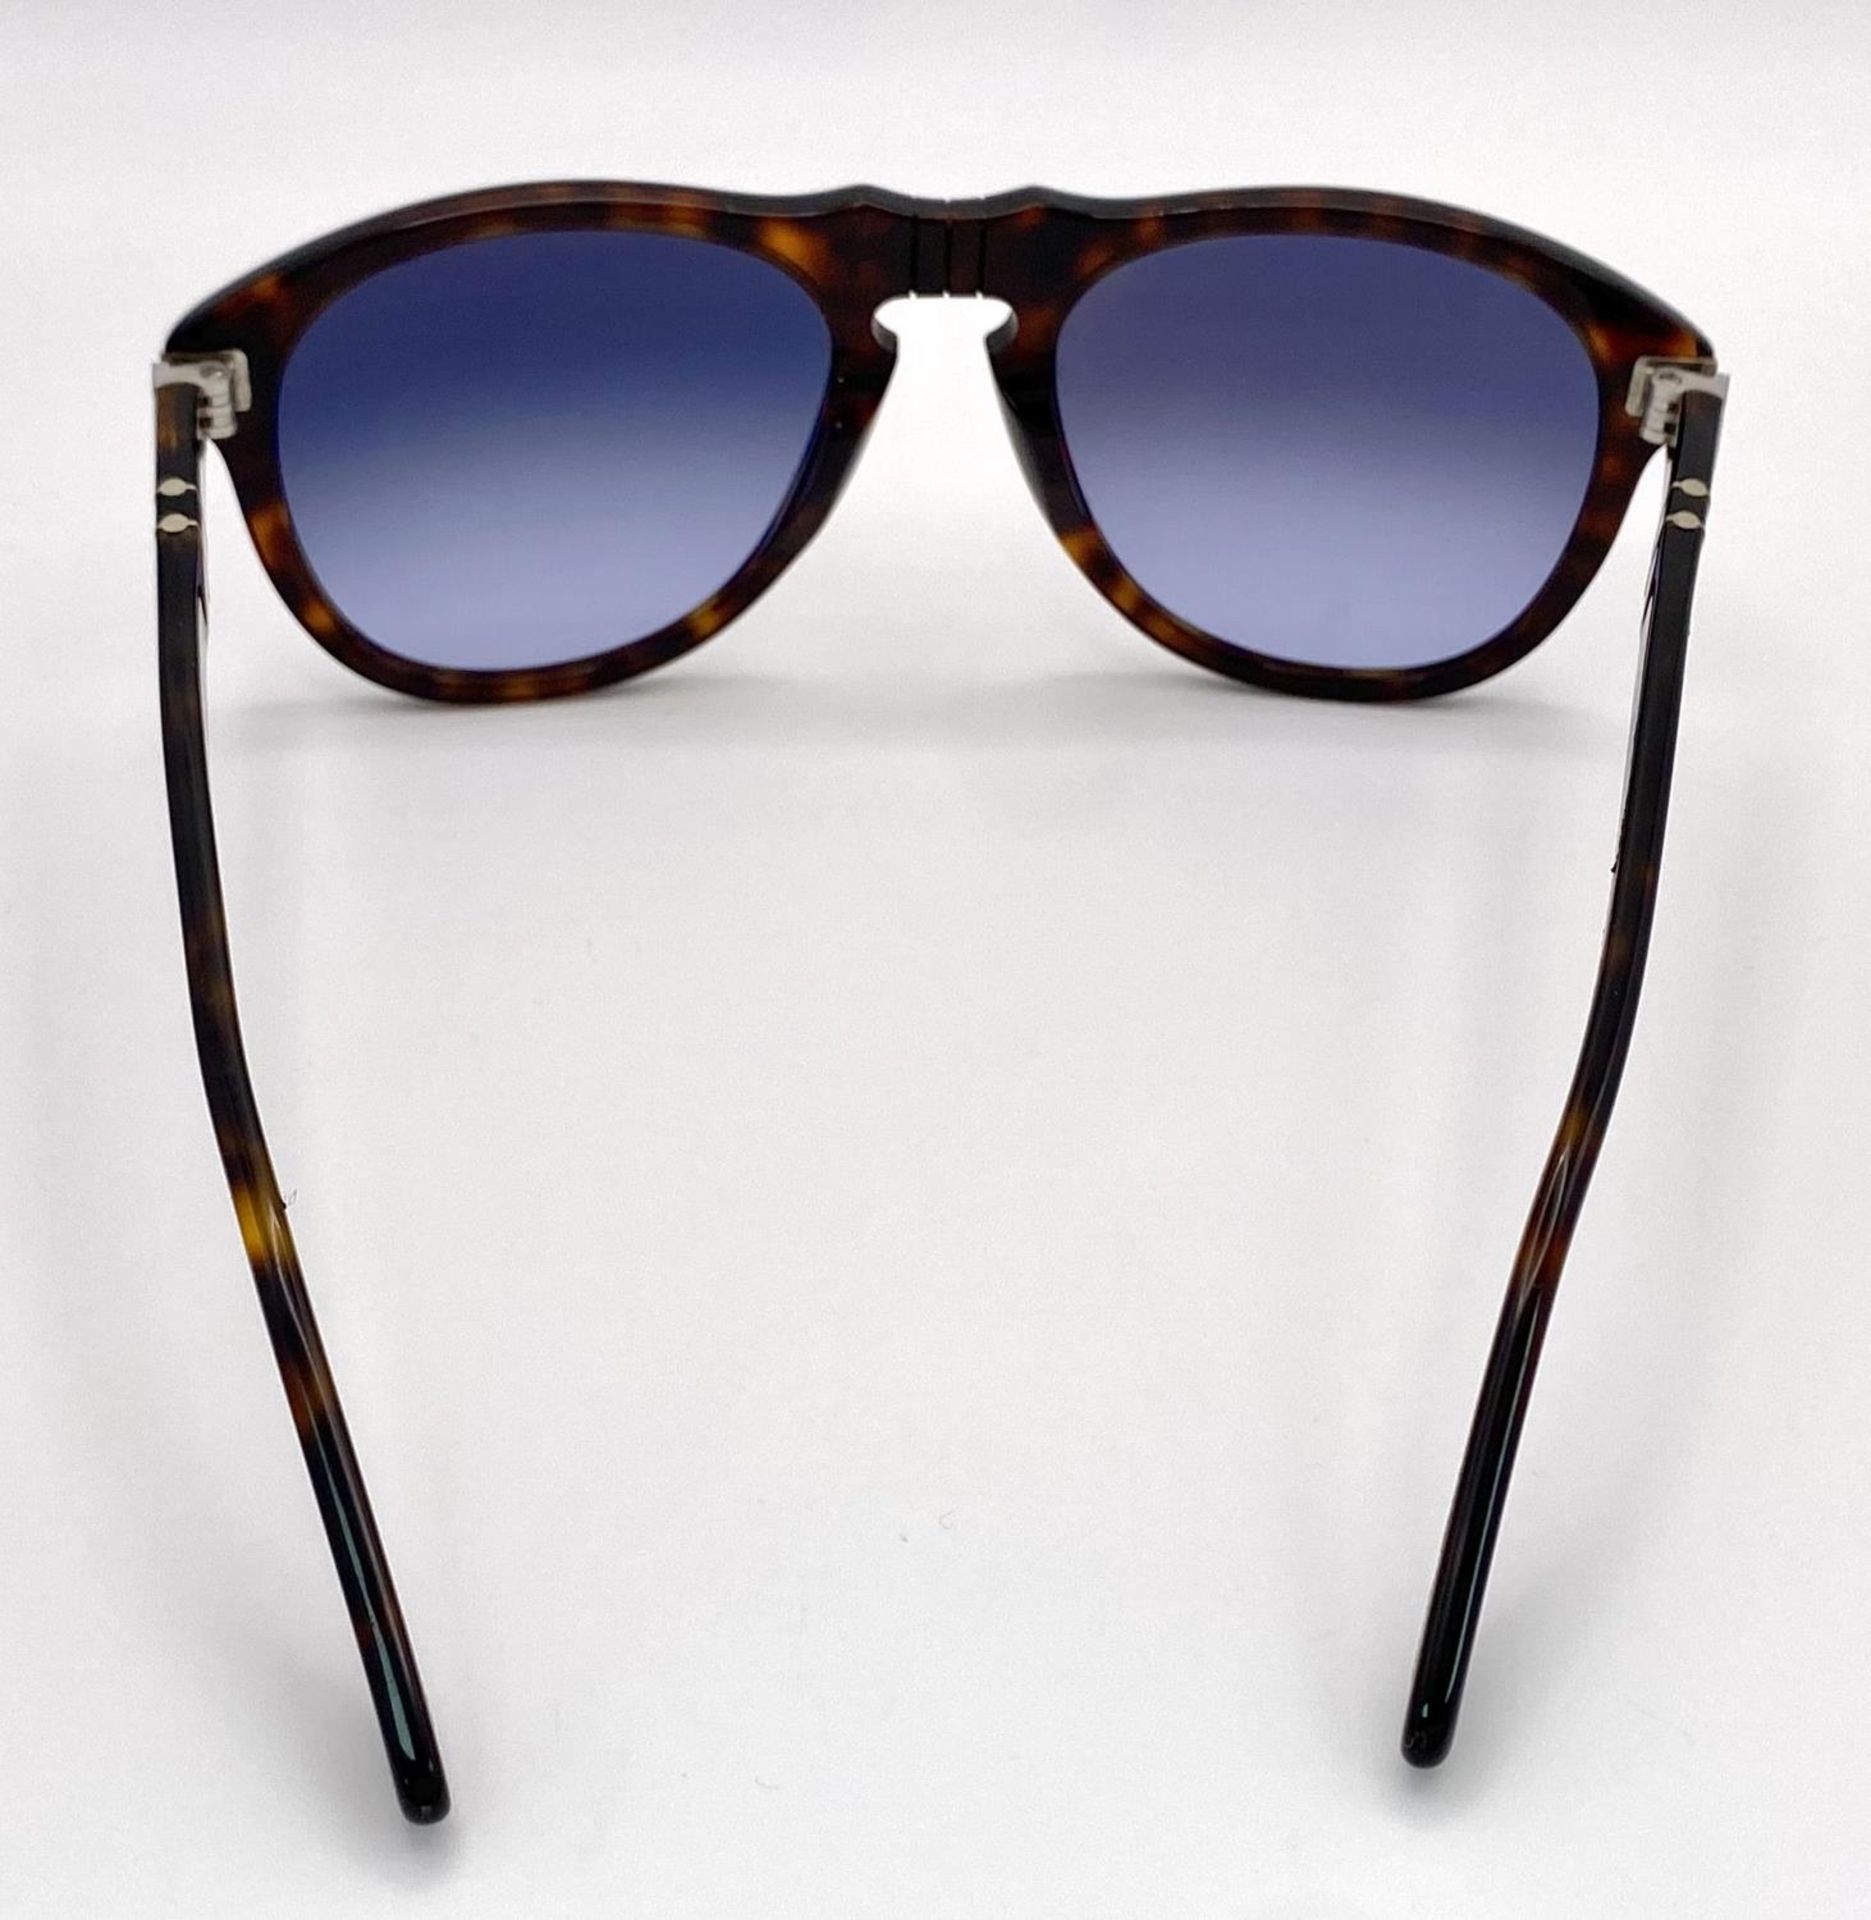 A Pair of Designer Persol Sunglasses. - Image 4 of 7